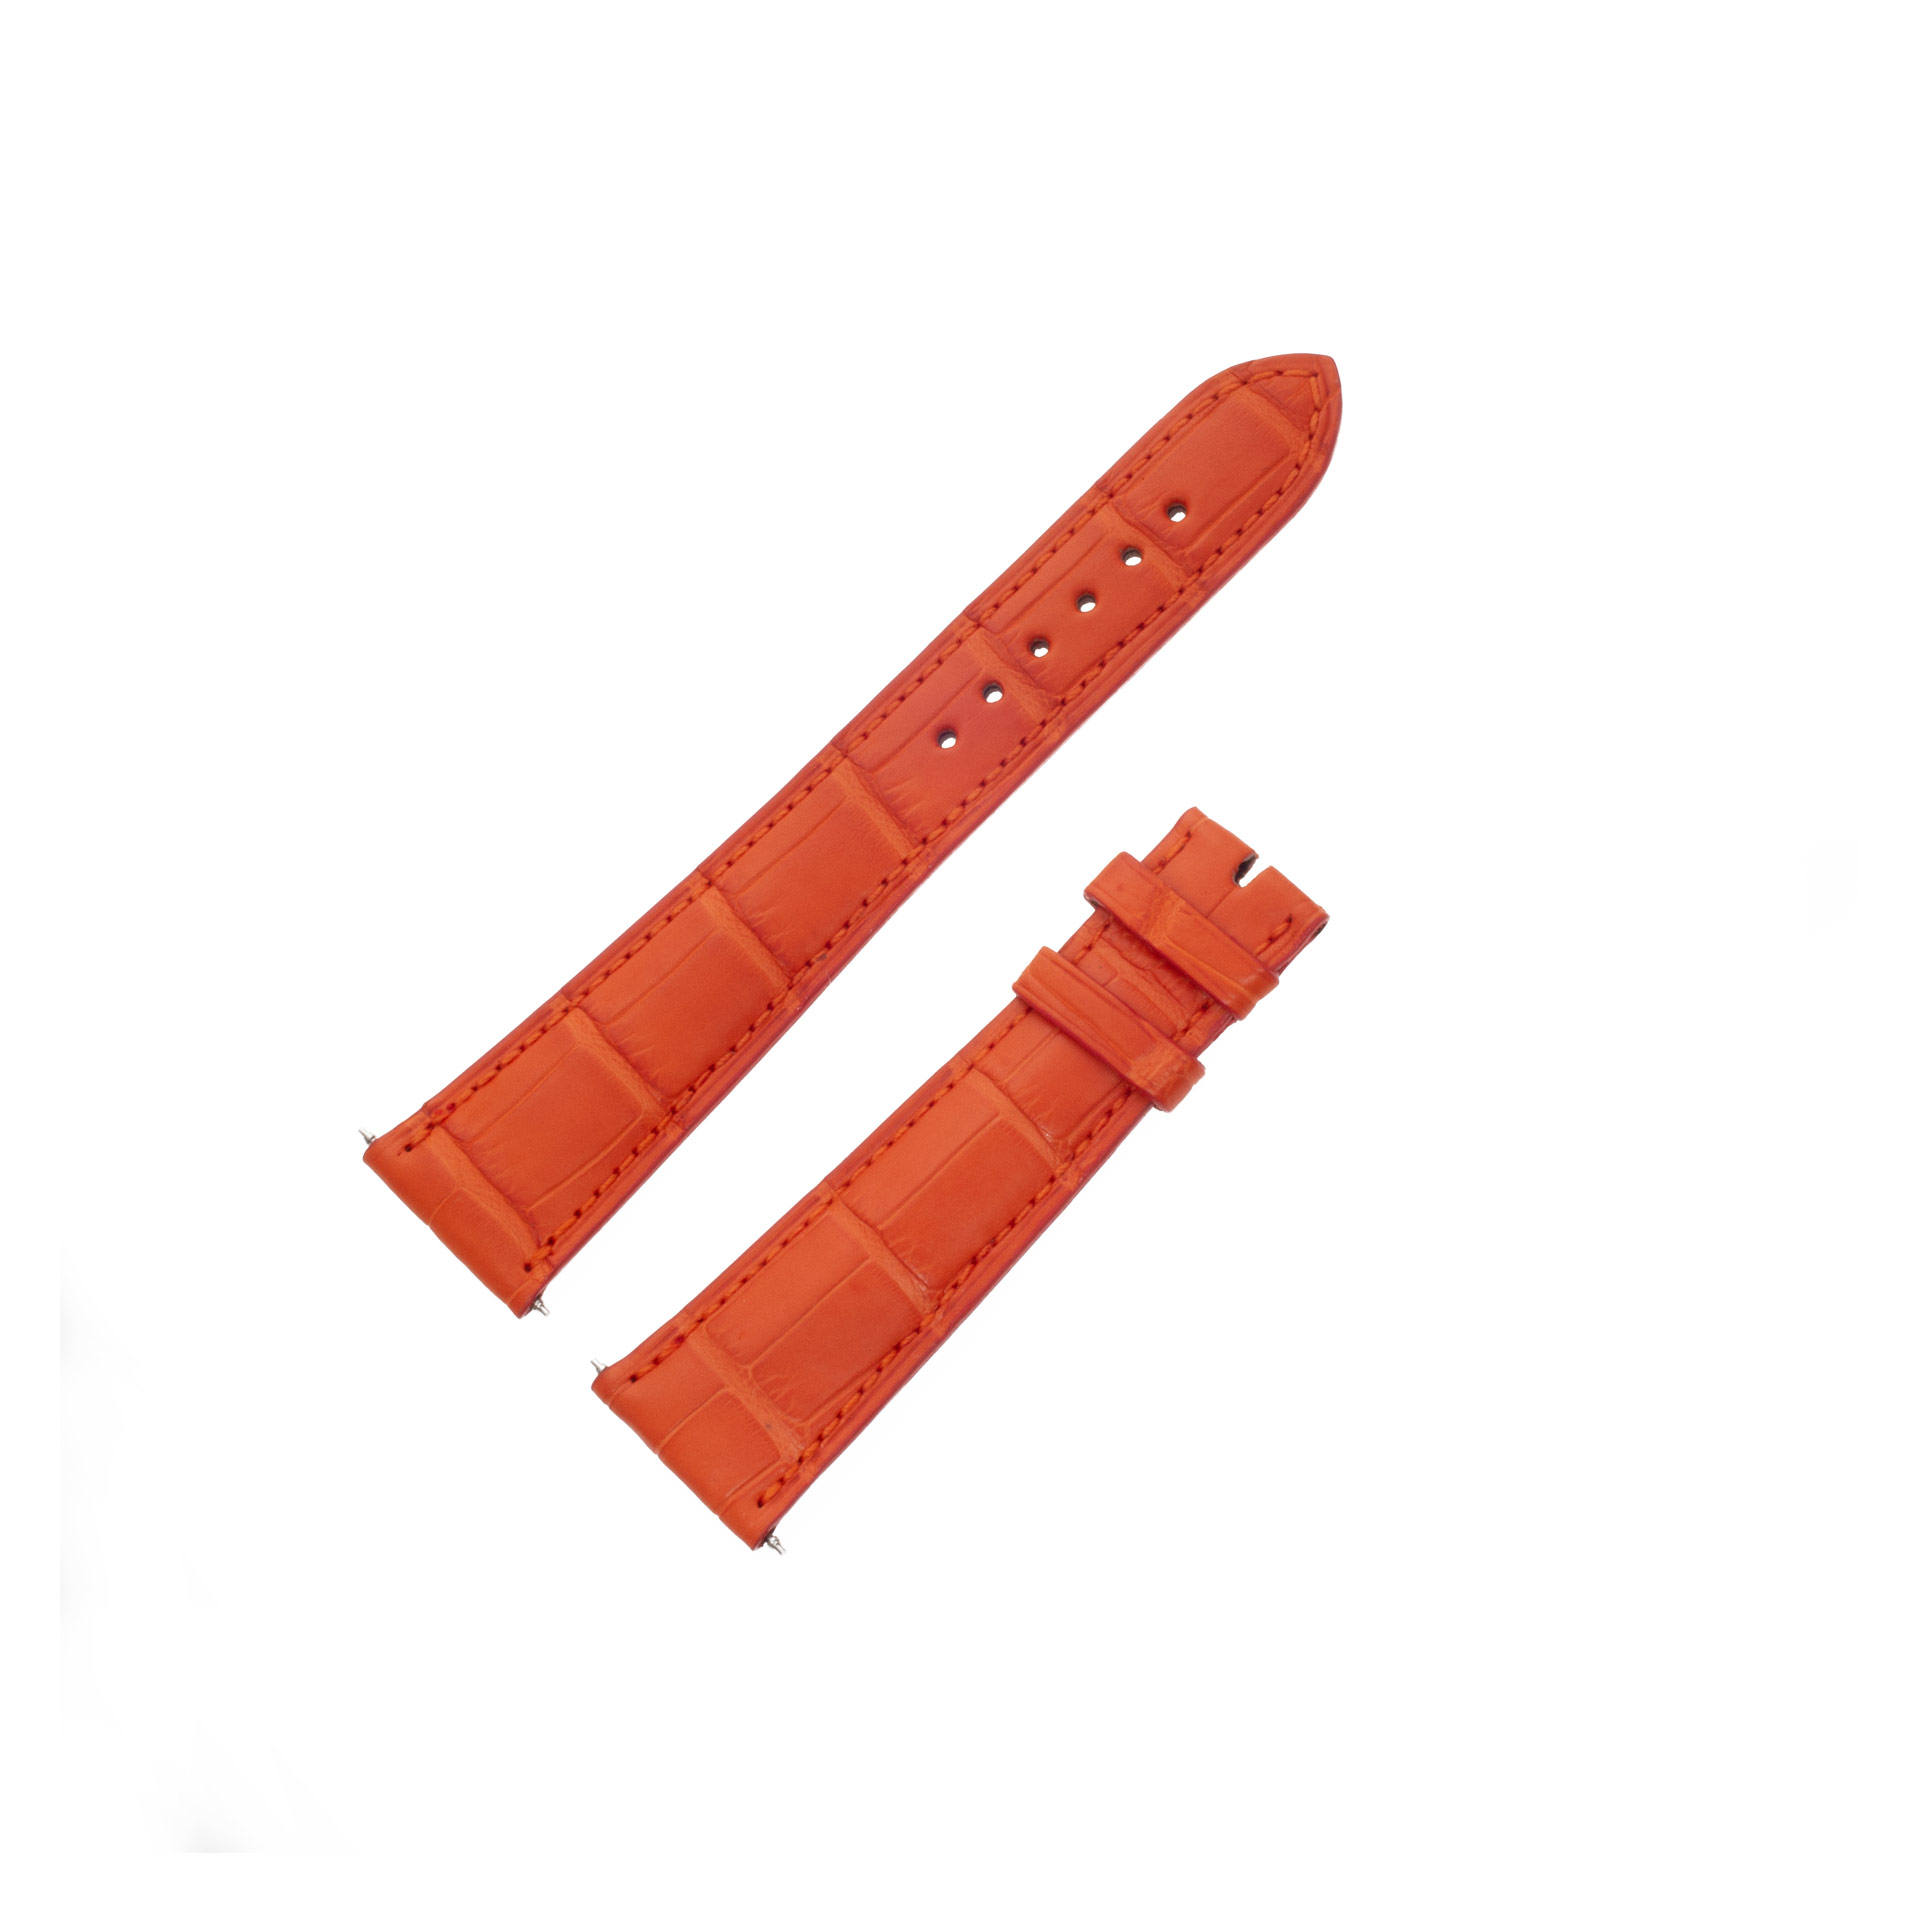 Parmigiani orange alligator strap for tang buckle (20x16)